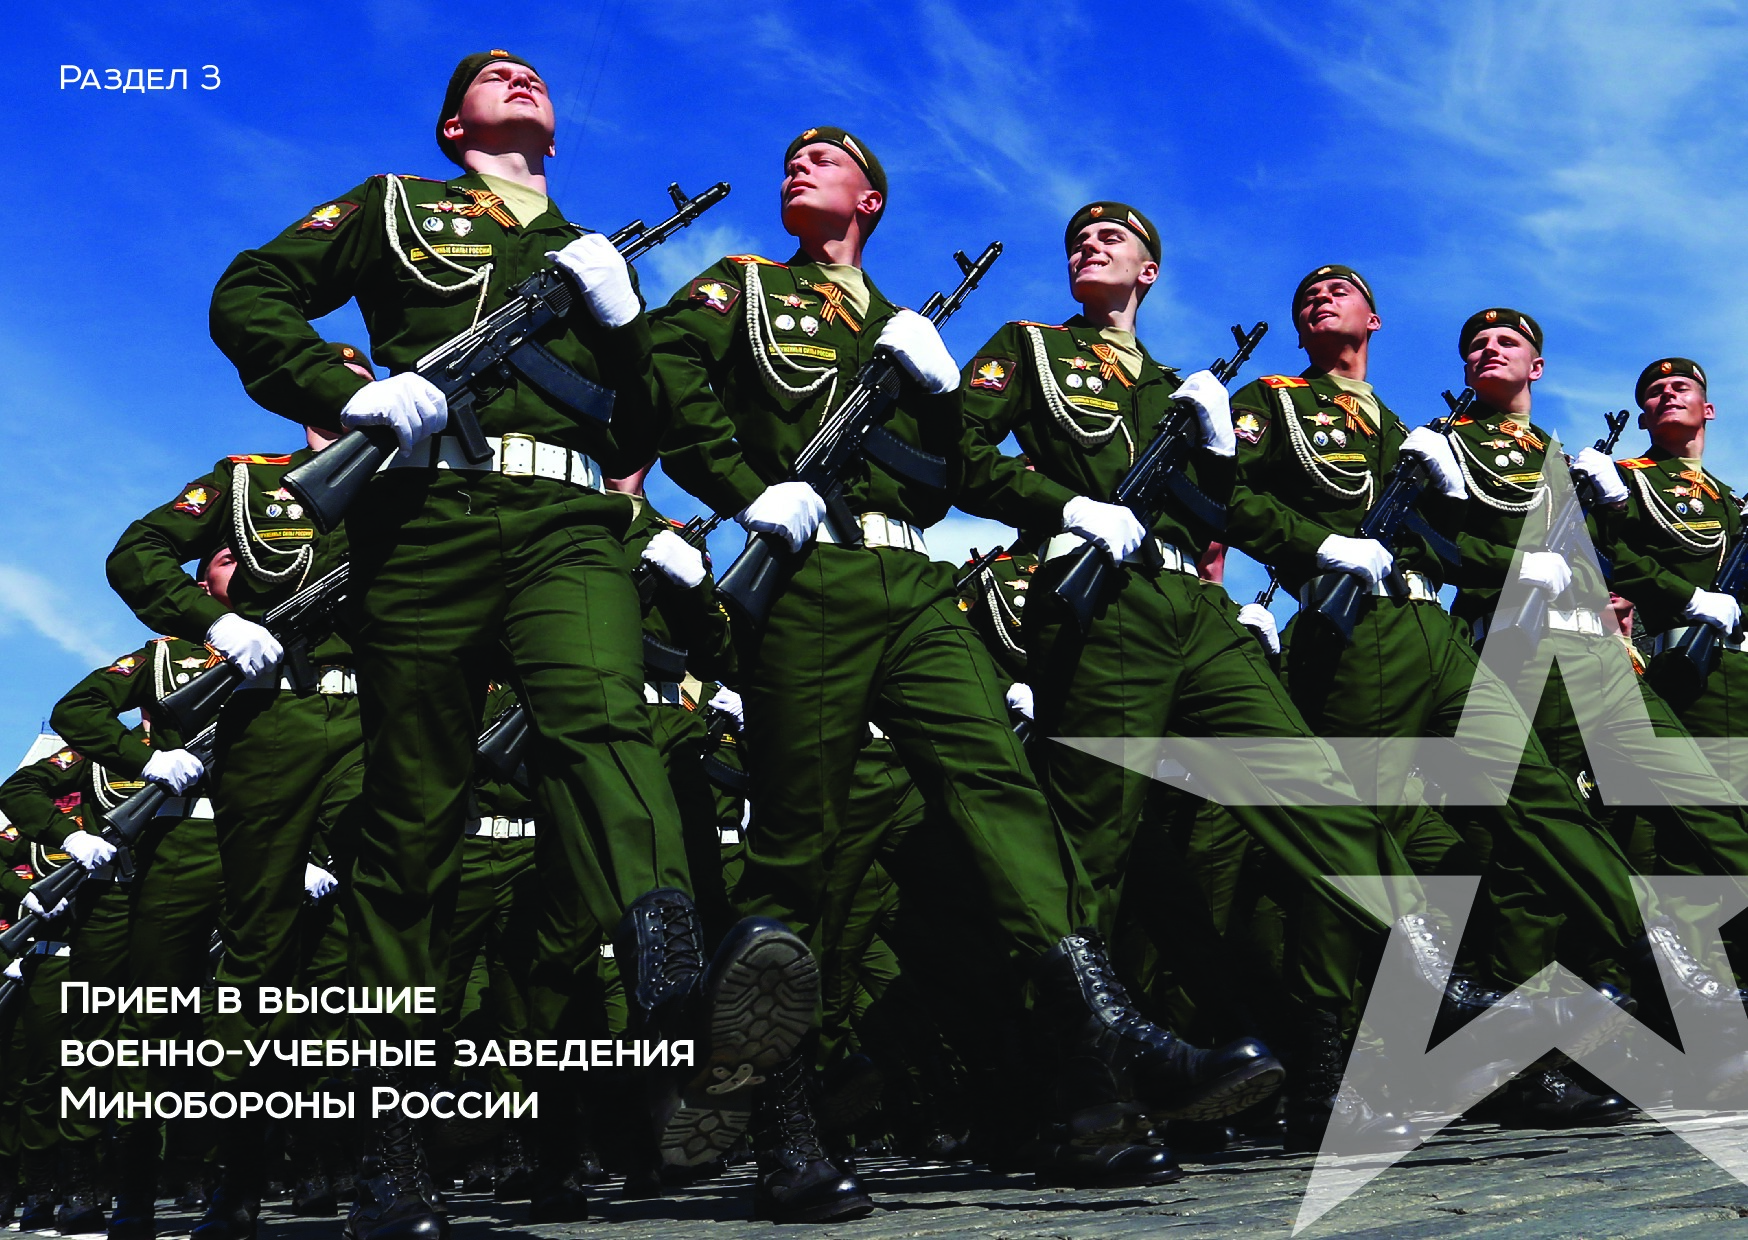 Парад ходила. Солдаты на параде. Российский солдат на параде. Русские солдаты на параде. Современная Российская армия.